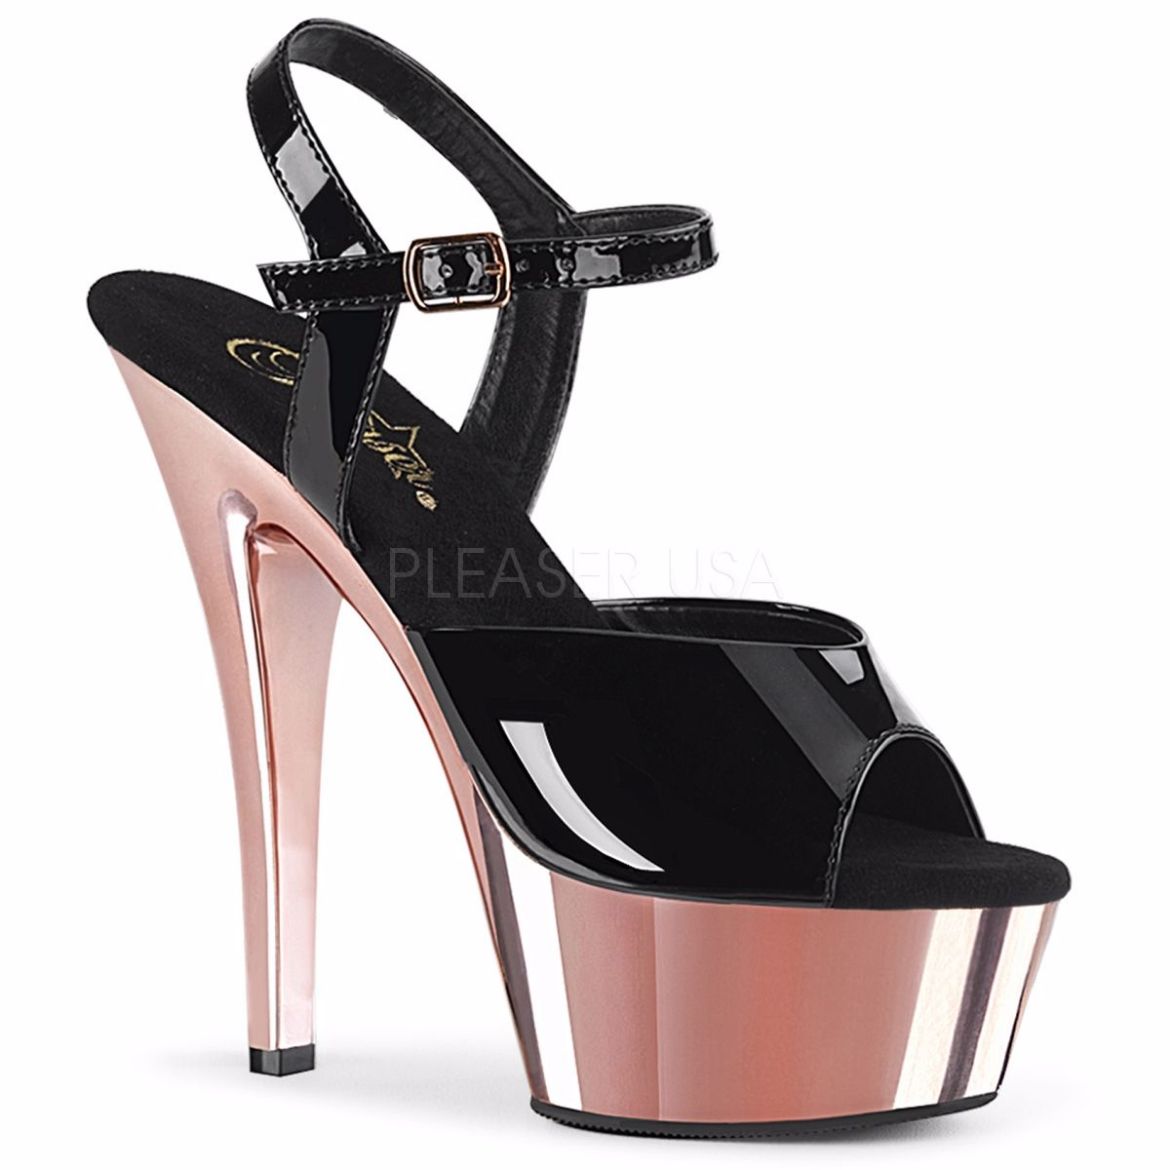 Product image of Pleaser KISS-209 Black Patent/Rose Gold Chrome 6 inch (15.2 cm) Heel 1 3/4 inch (4.5 cm) Platform Ankle Strap Sandal Shoes